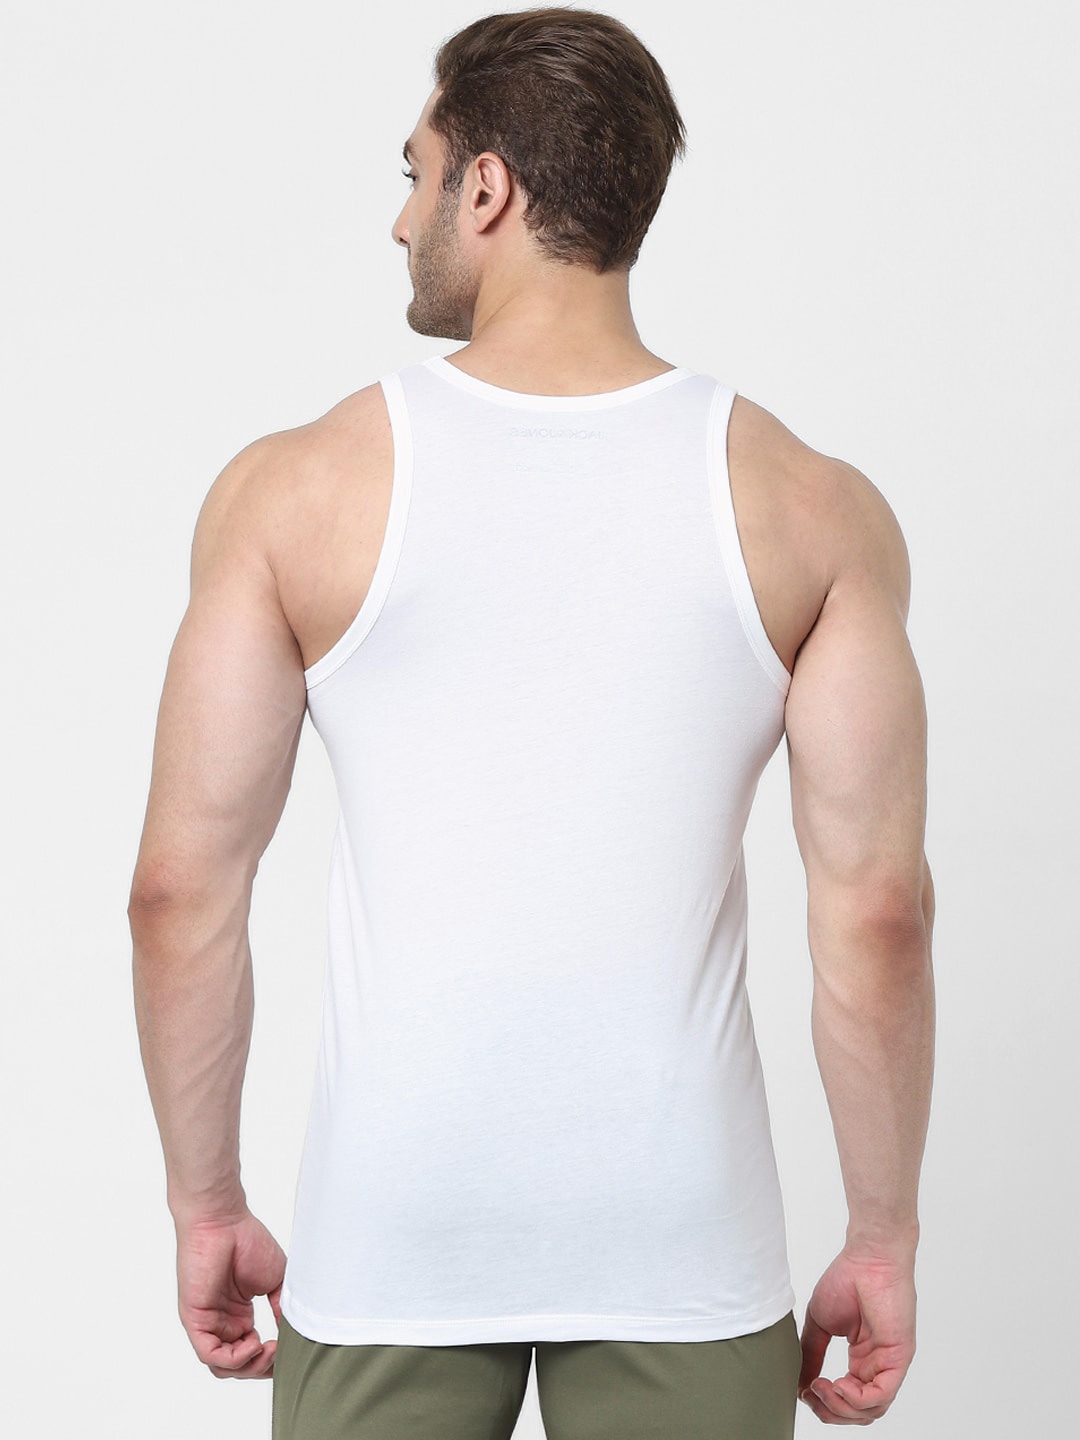 Clothing Innerwear Vests | Jack & Jones Men Pack Of 2 White Solid Cotton Innerwear Vests - LO55386